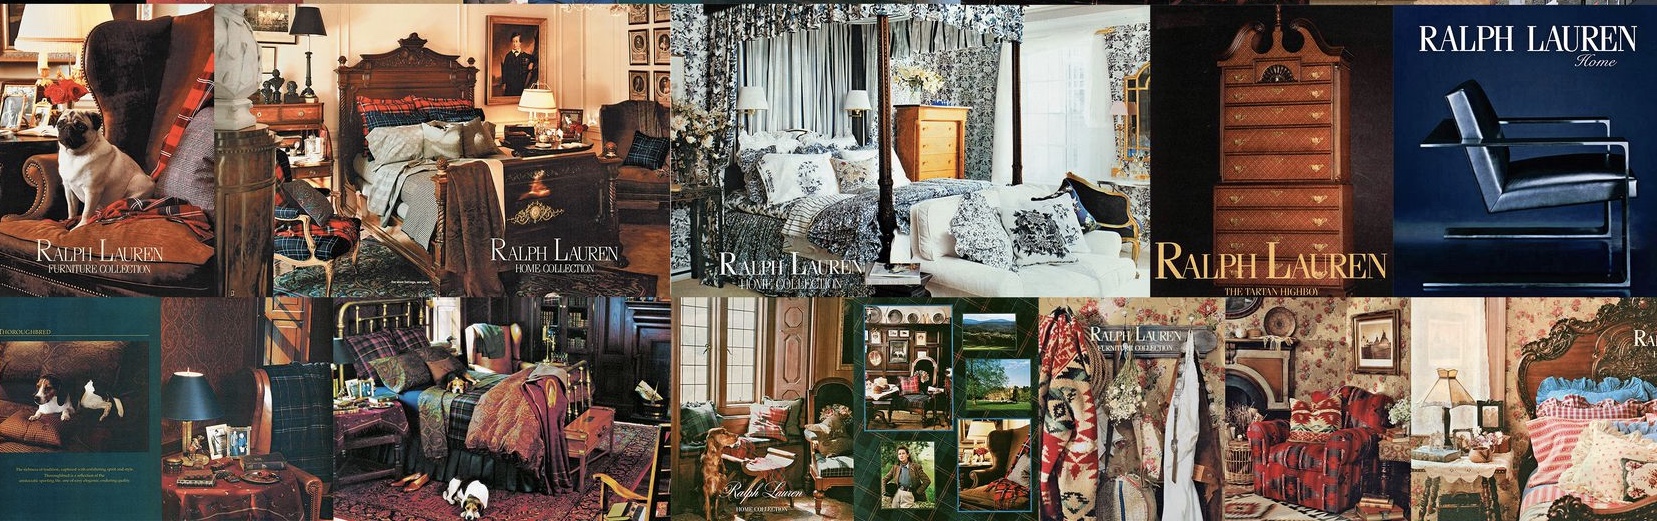 Ralph Lauren his Life RL50 Home Interiors forever Chic by Meg